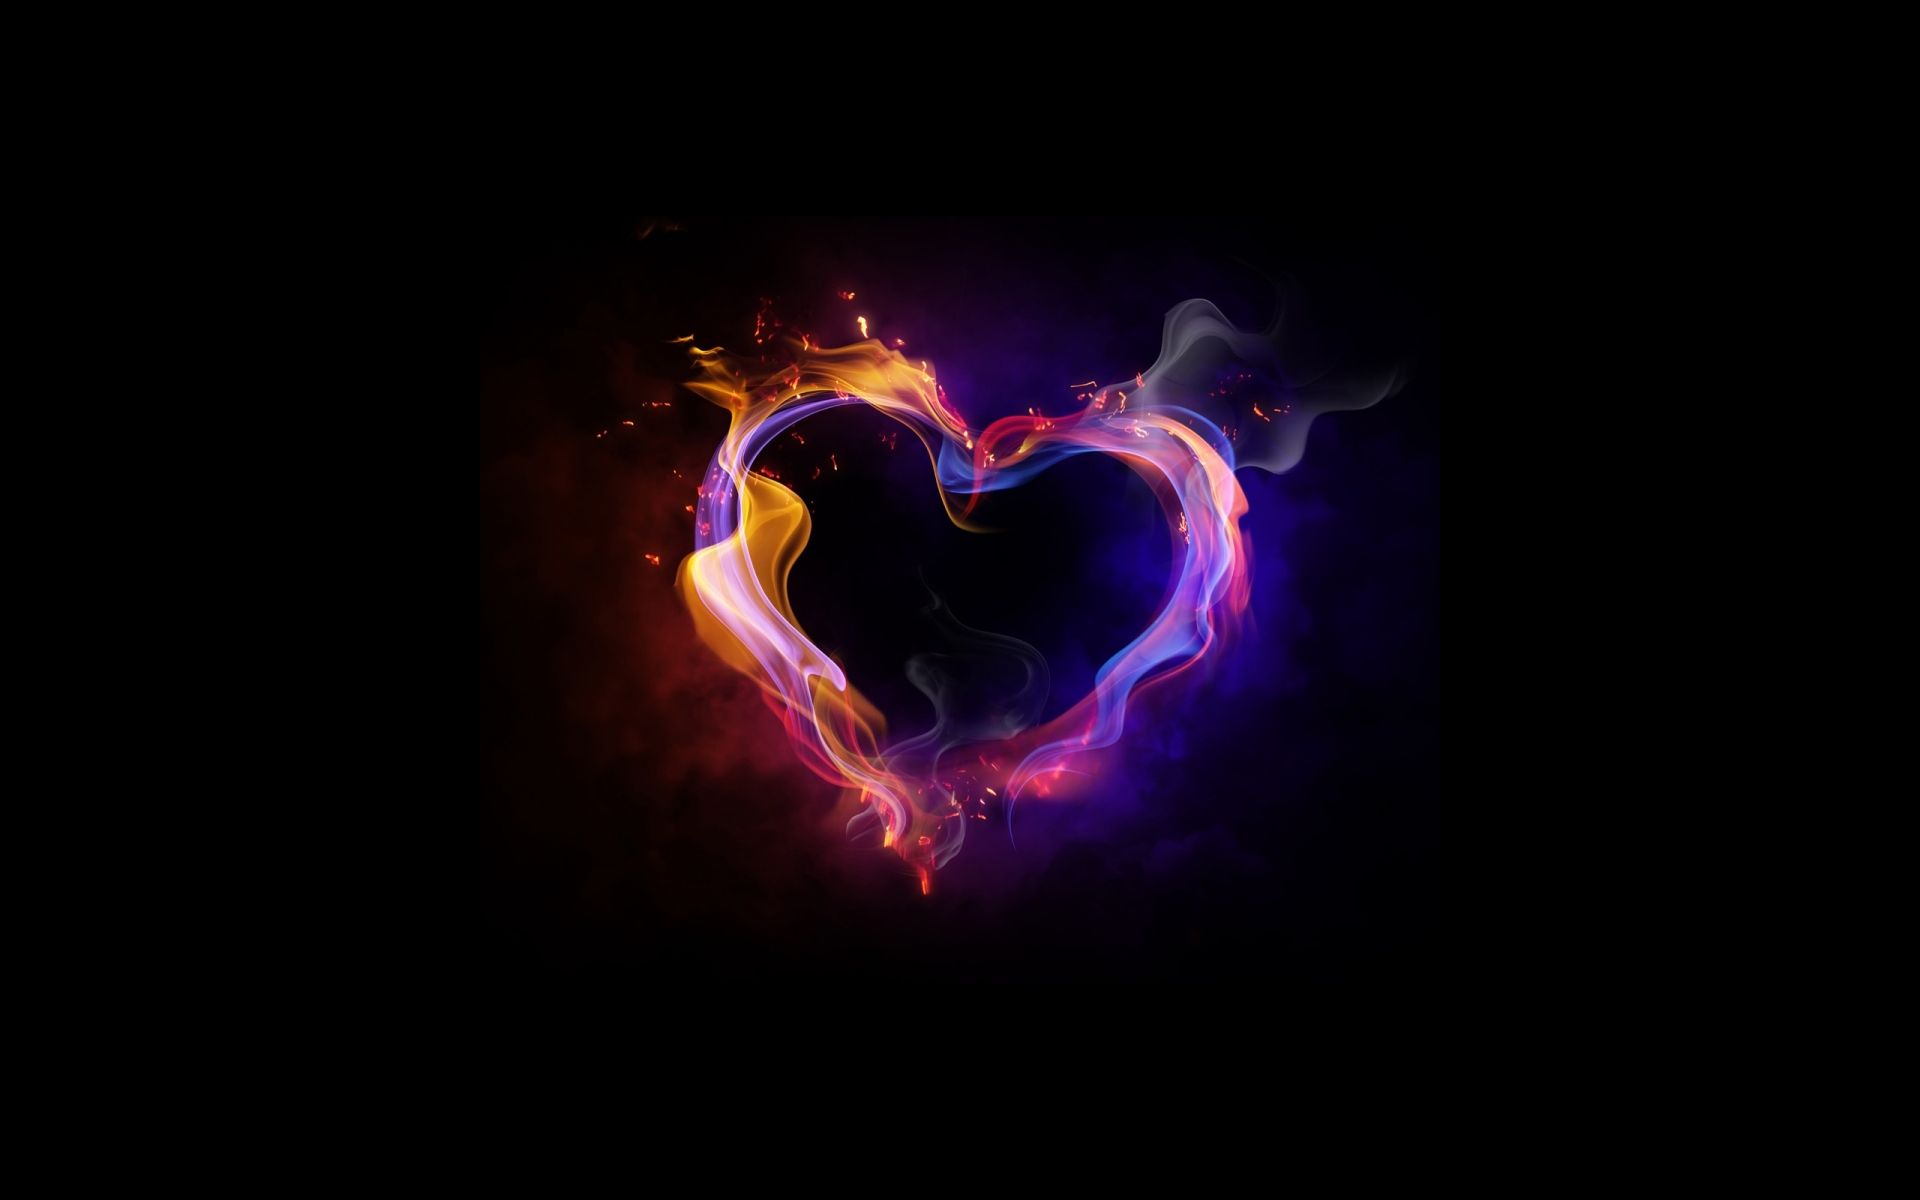 fire, Ice, Ying, Yang, Heart, Love, Romance, Emotion, Fire, Flames